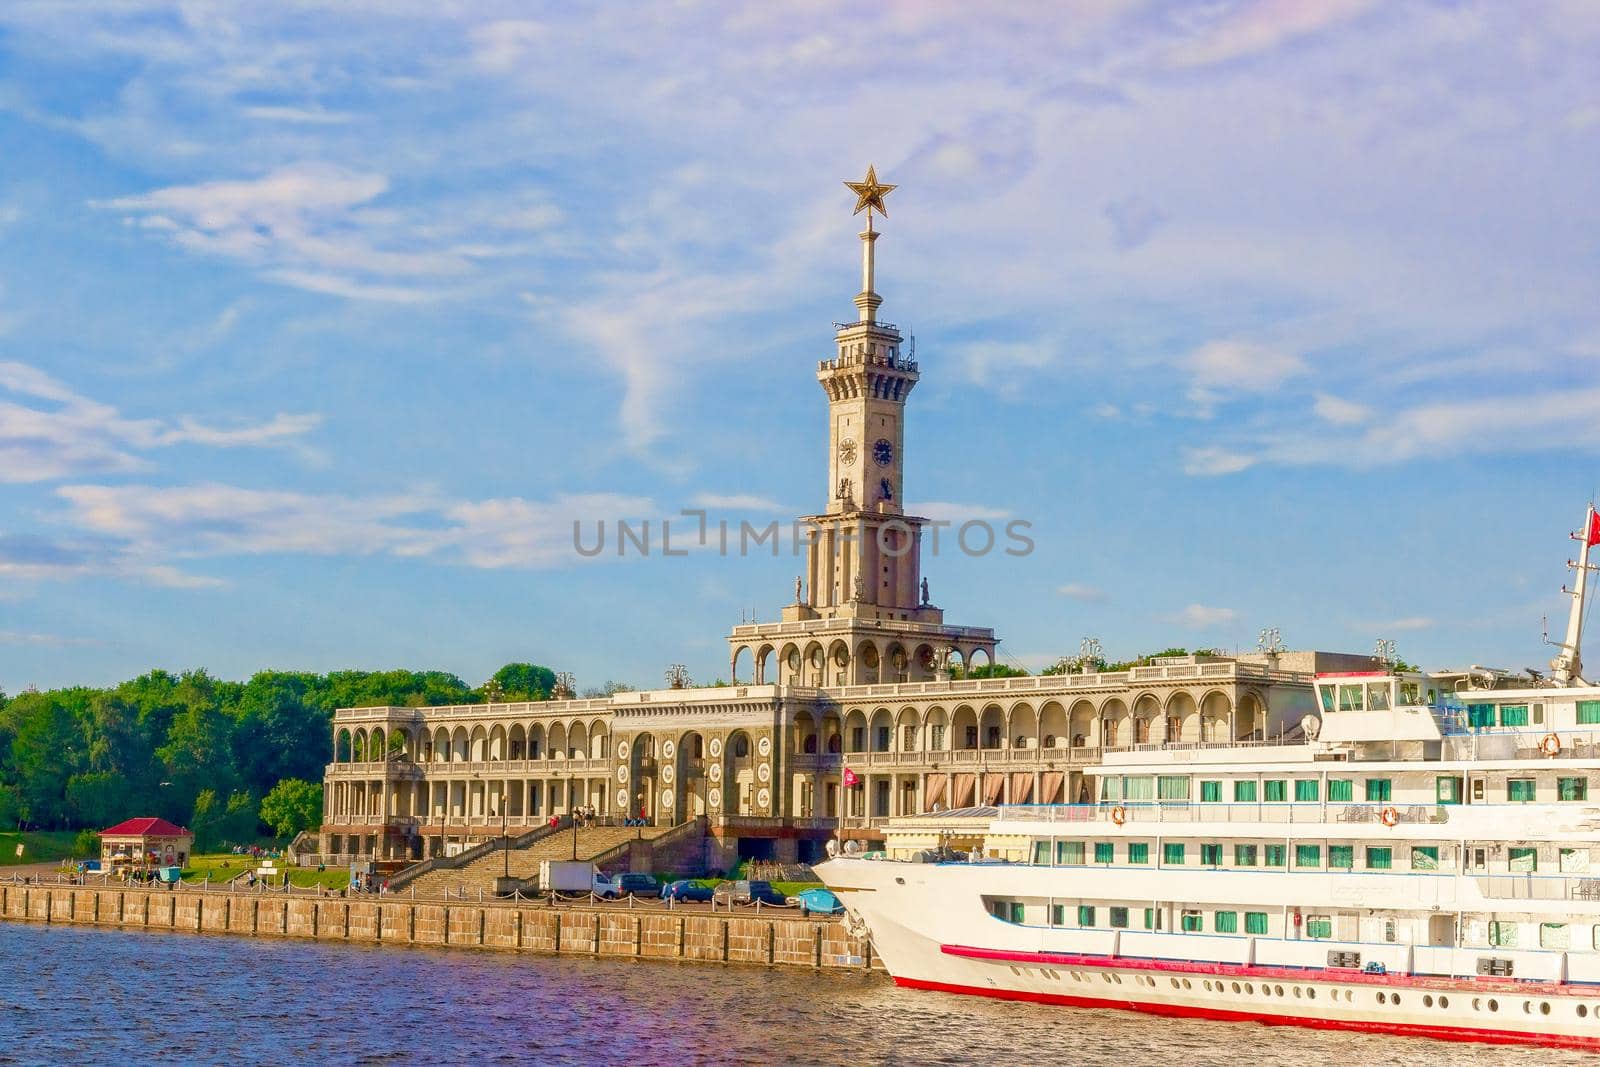 The ship sails to the river station. by kolesnikov_studio